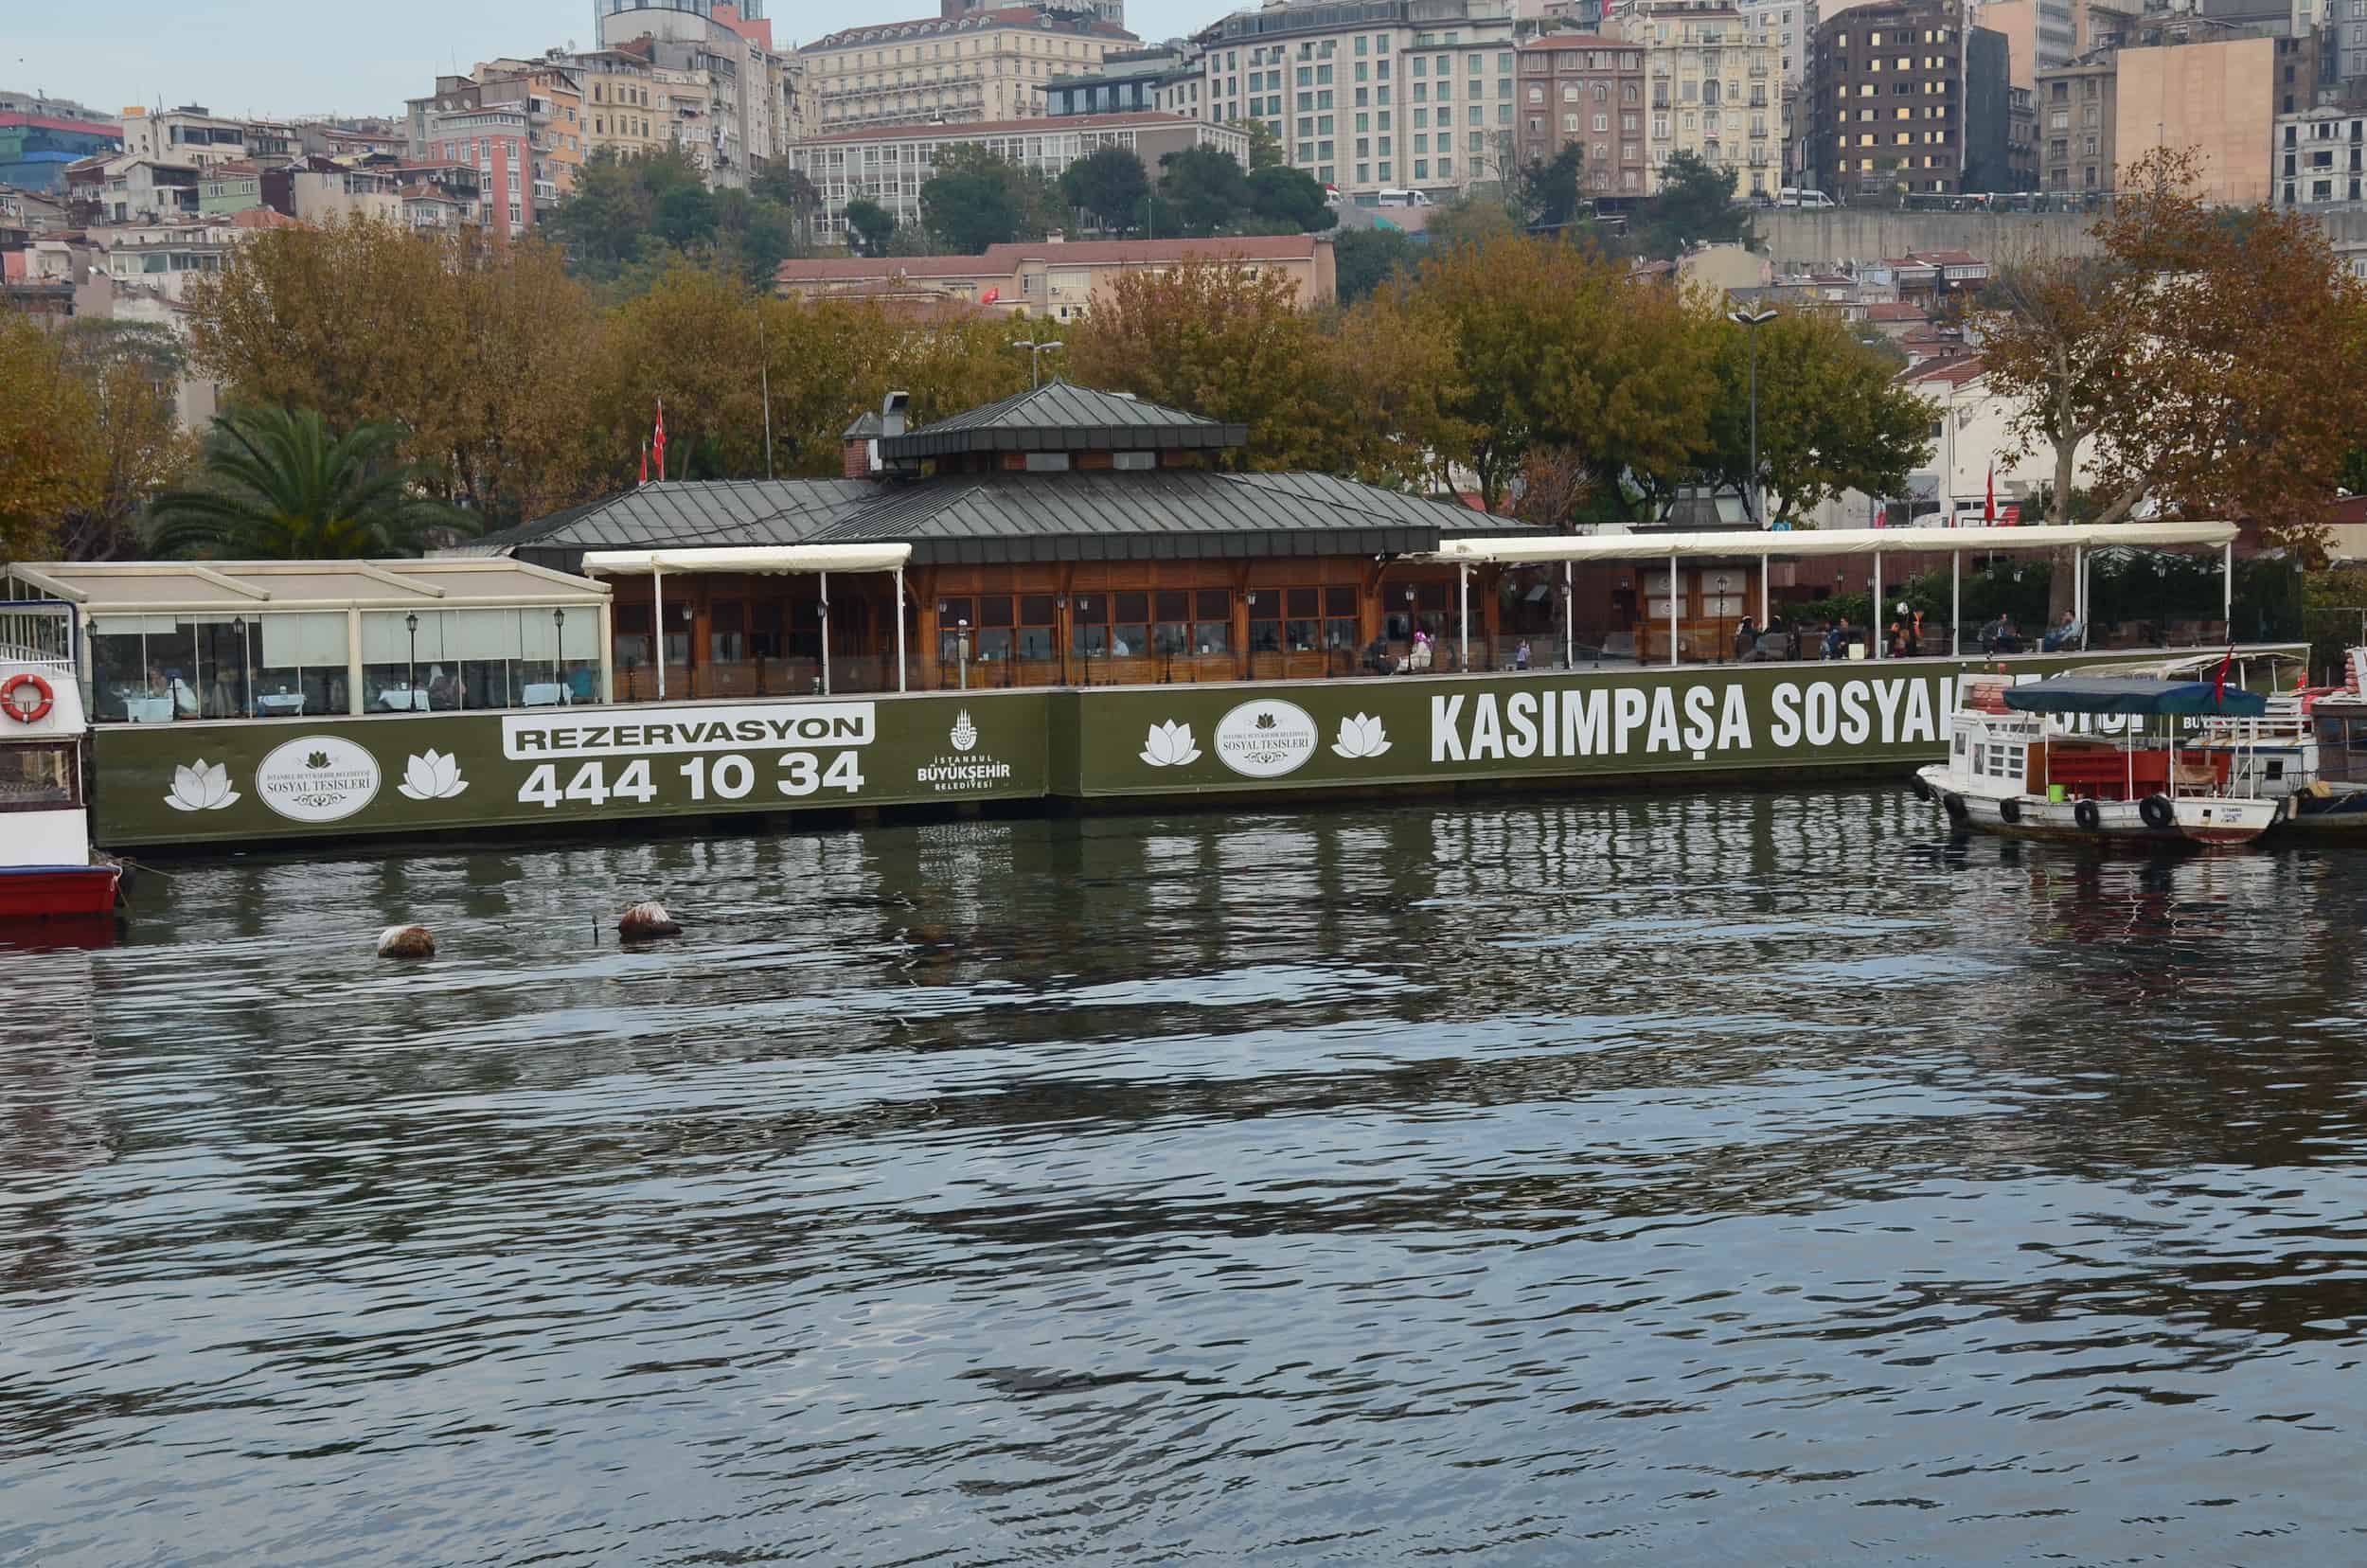 Kasımpaşa Social Facilities in Kasımpaşa, Istanbul, Turkey